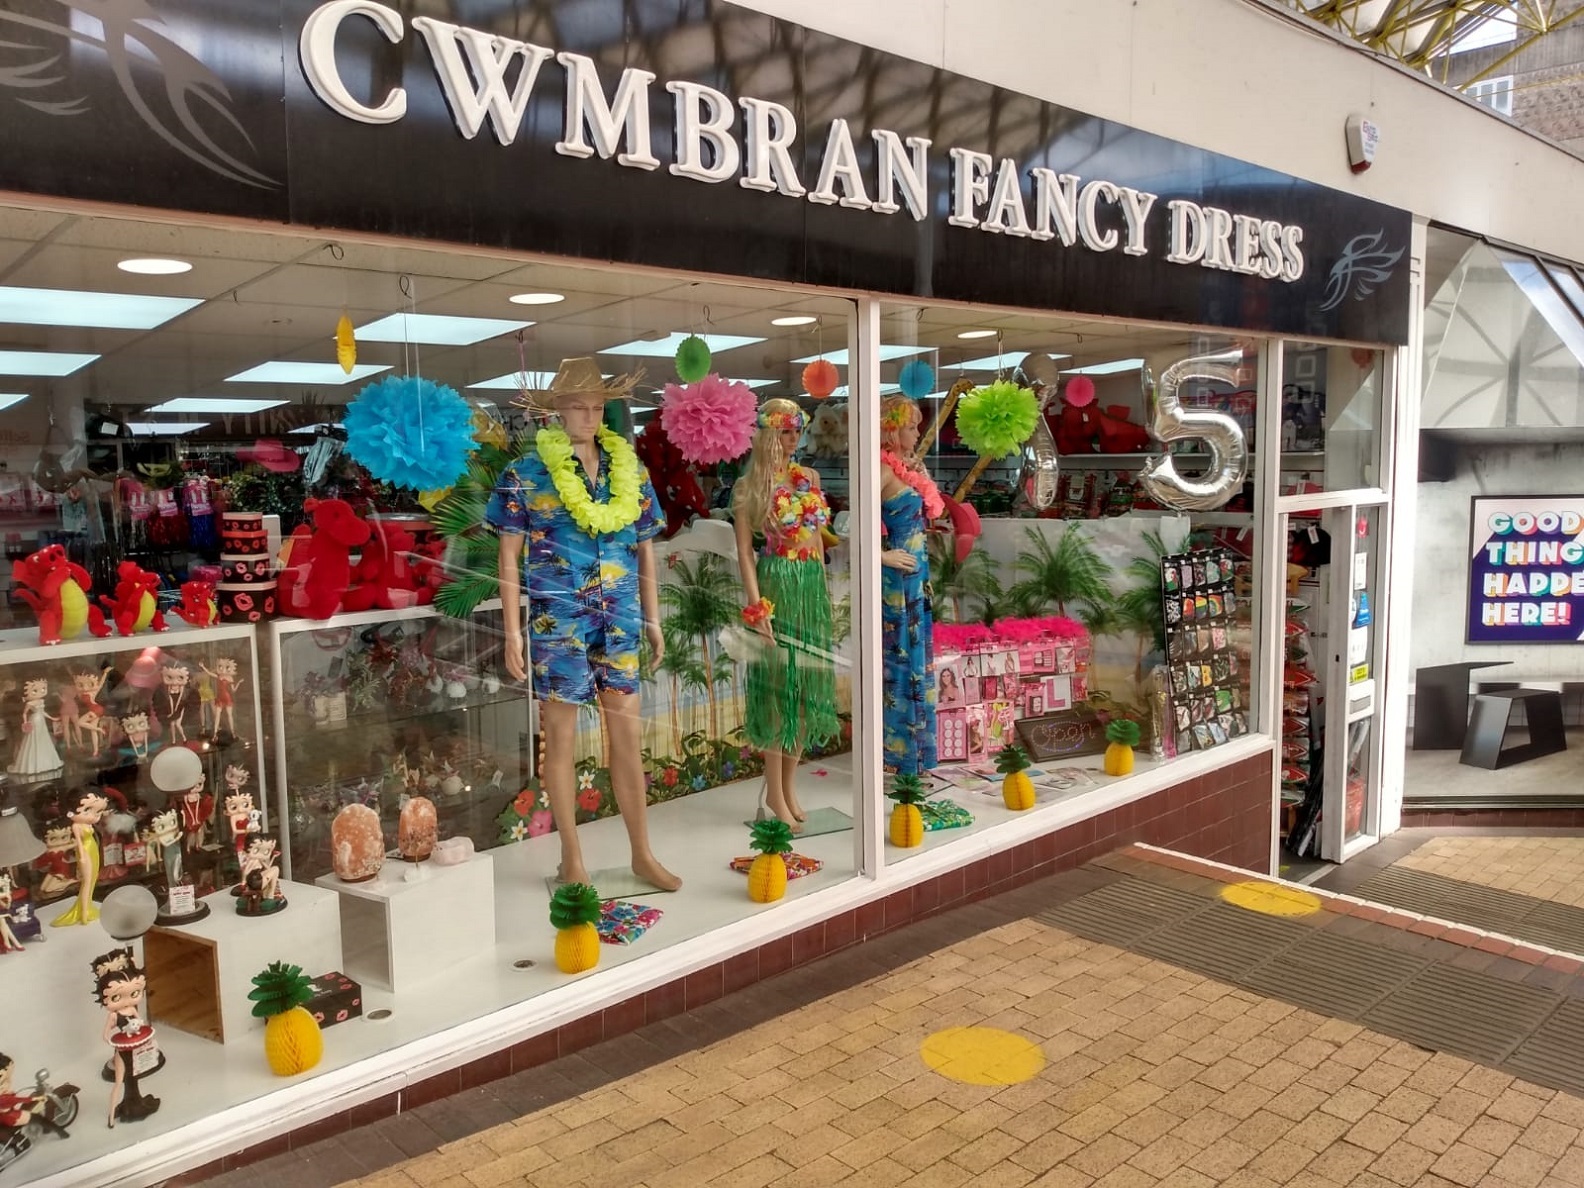 Cwmbran Fancy Dress in Cwmbran Centre.